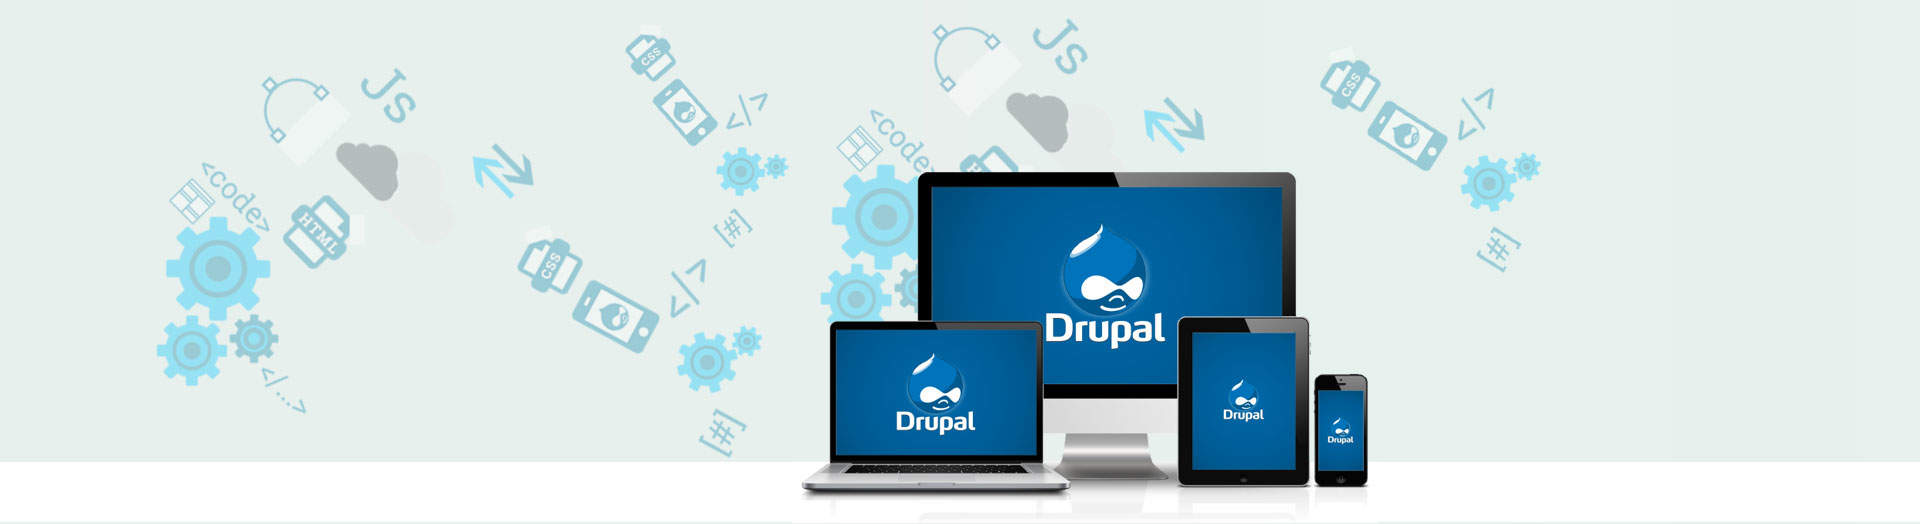 Drupal Development Company, Drupal Web Development Services